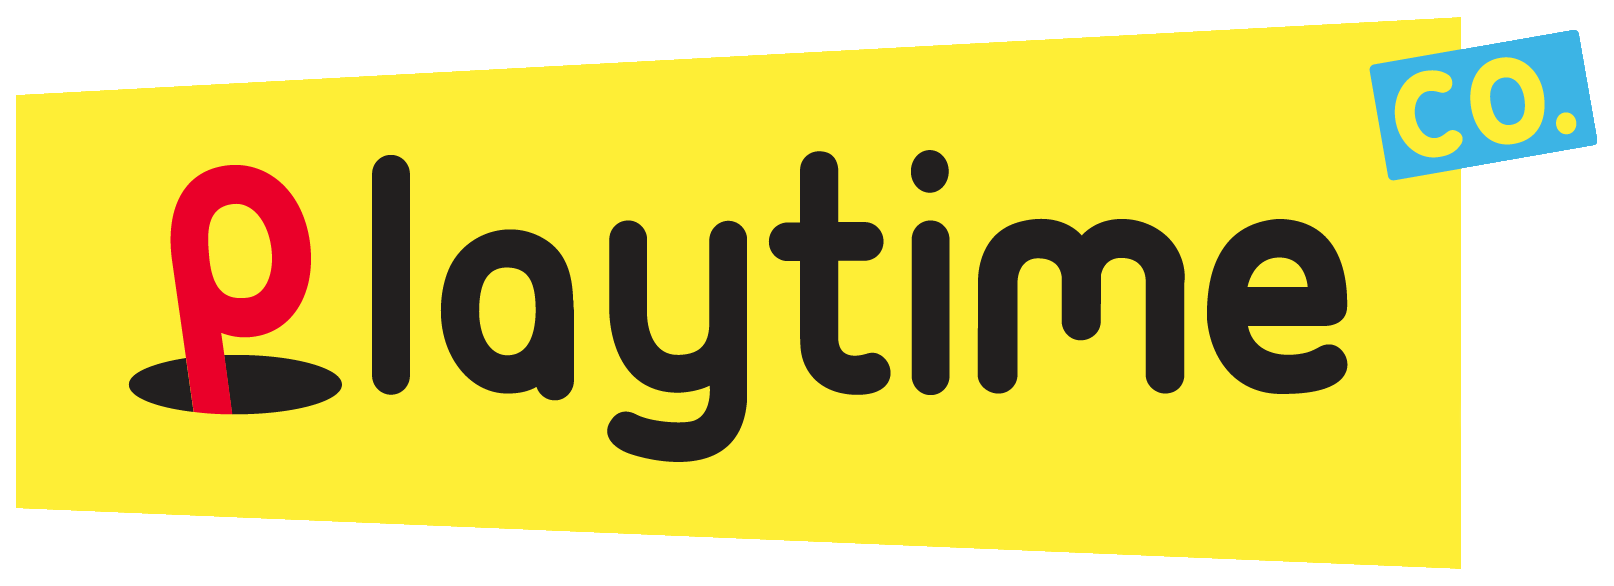 Popi playtime chapter. Playtime co. Poppy Playtime логотип. Логотип Поппи плей тайм. Логотип Плейтайм ко.